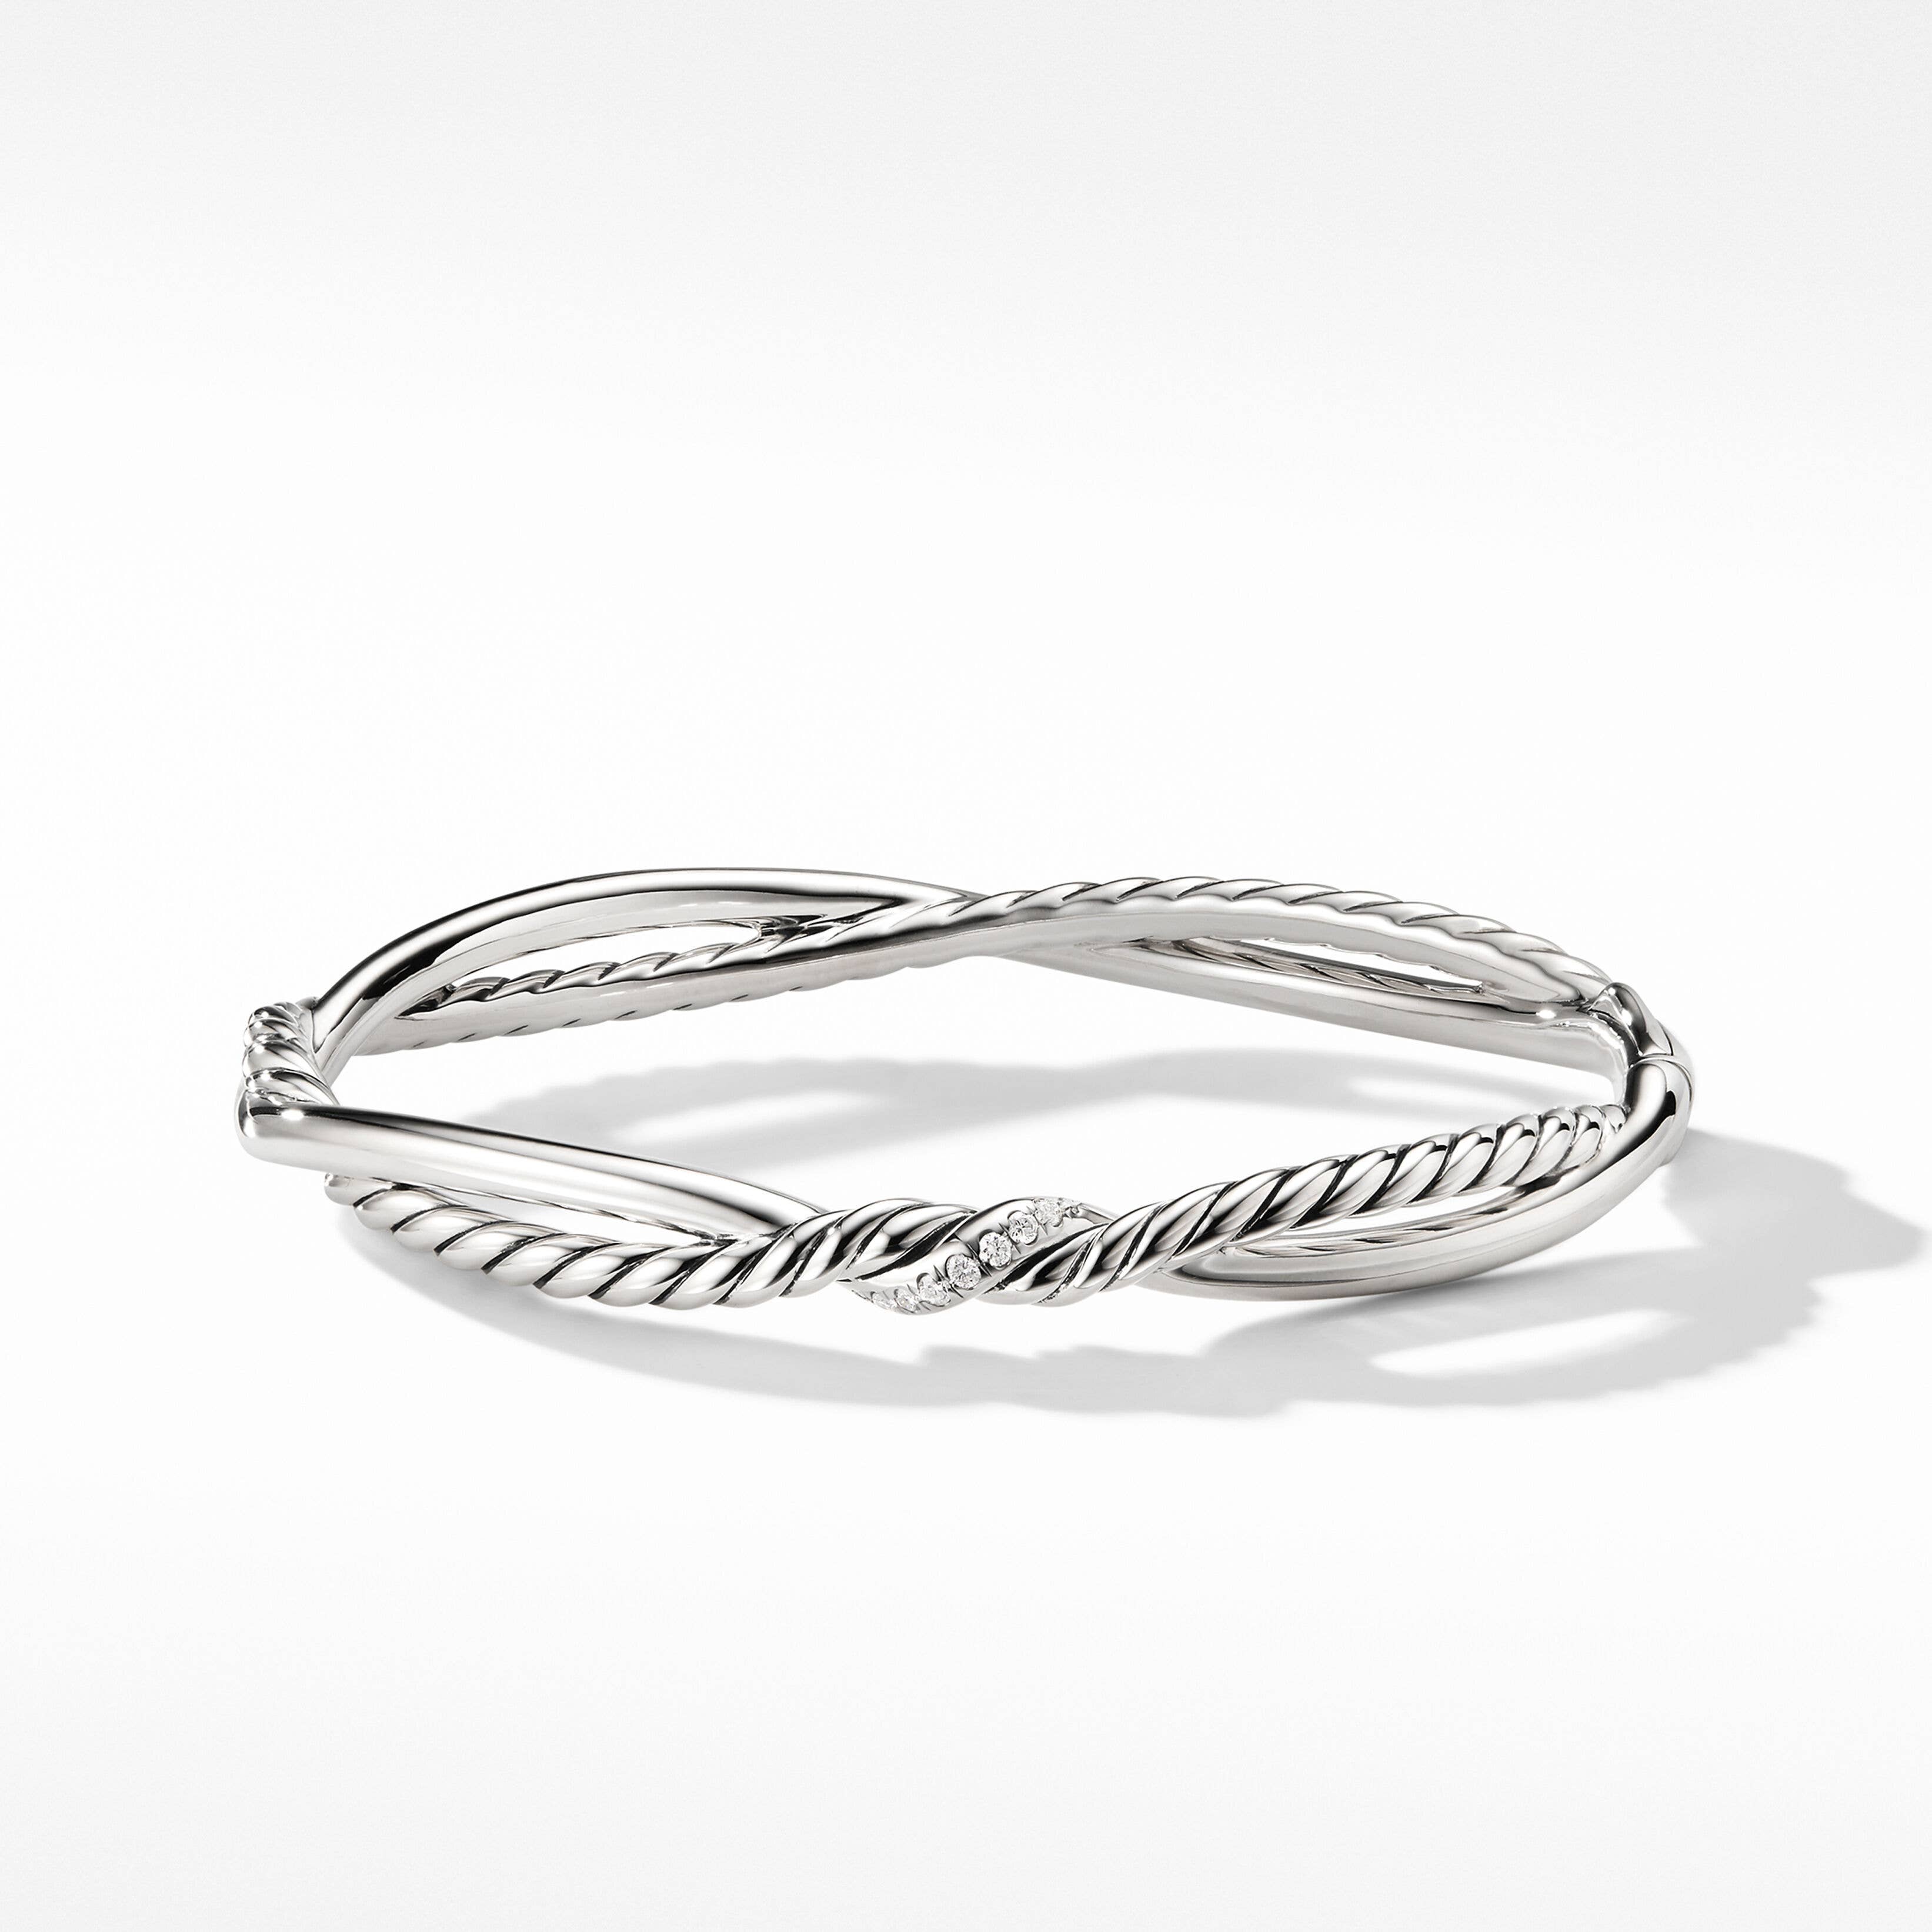 Continuance® Bracelet in Sterling Silver with Station Pavé Diamonds